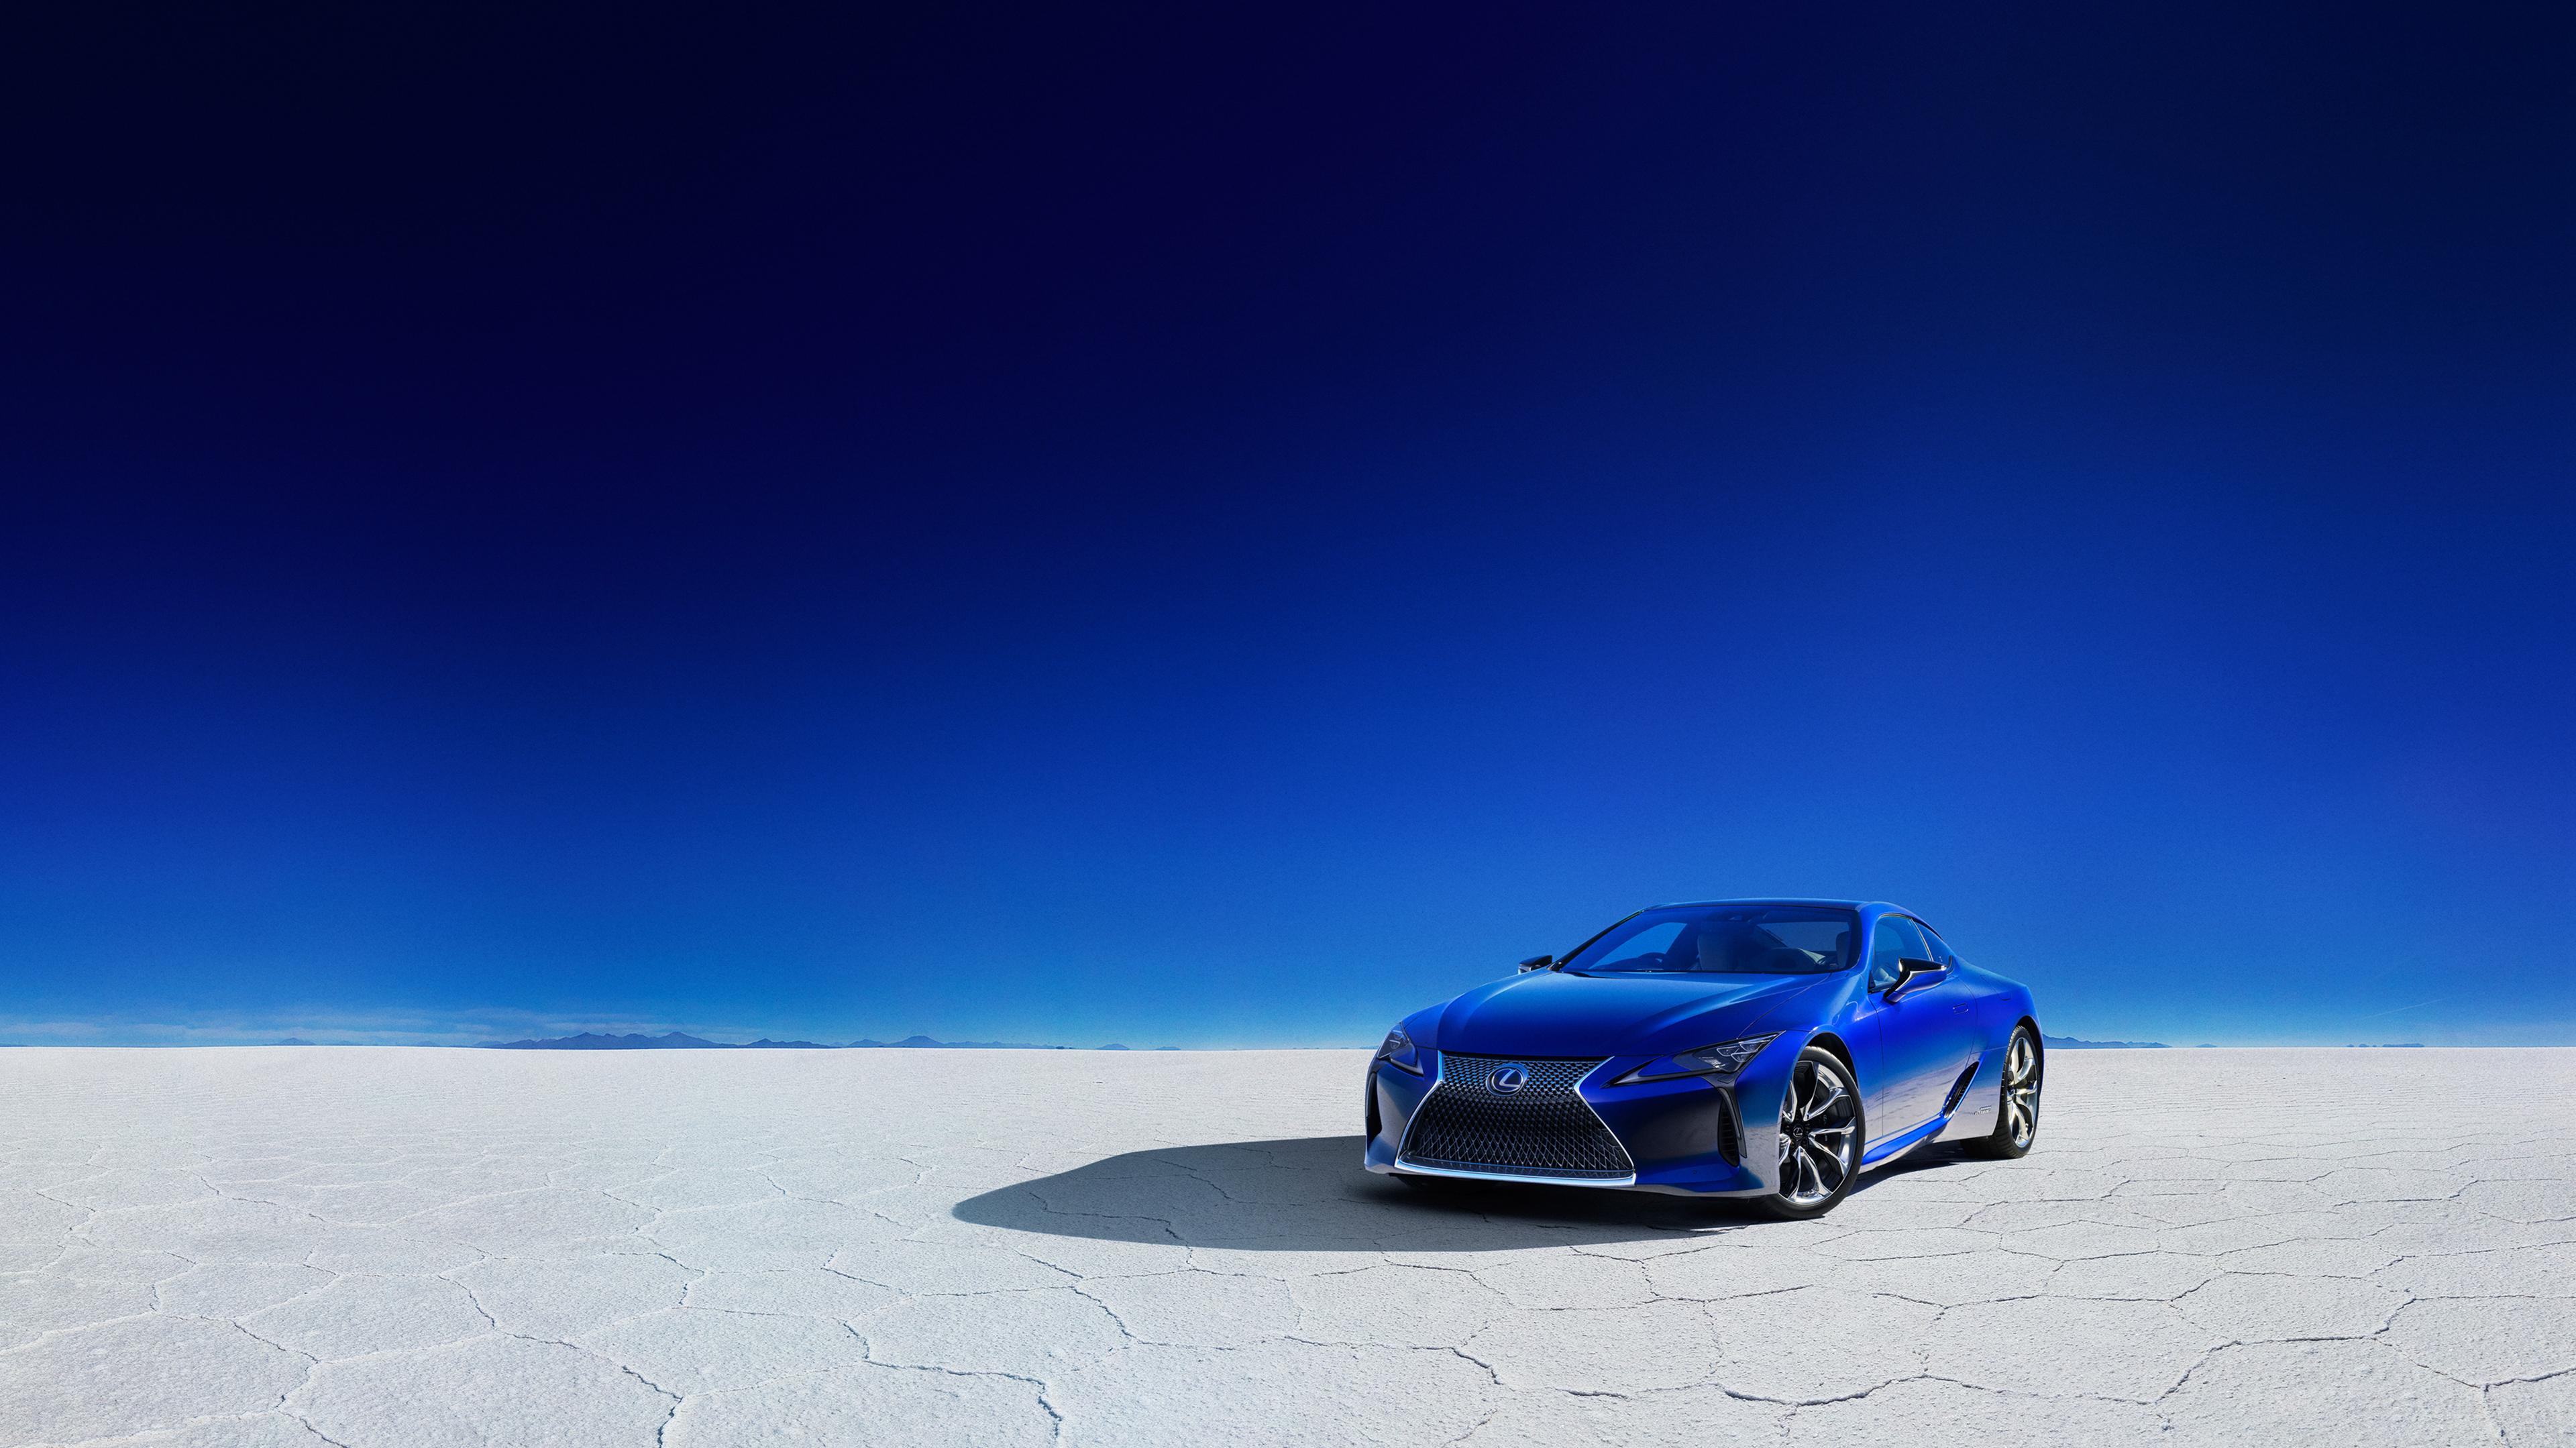 2018 Lexus LC 500h Structural Blue 4K Wallpaper   HD Car